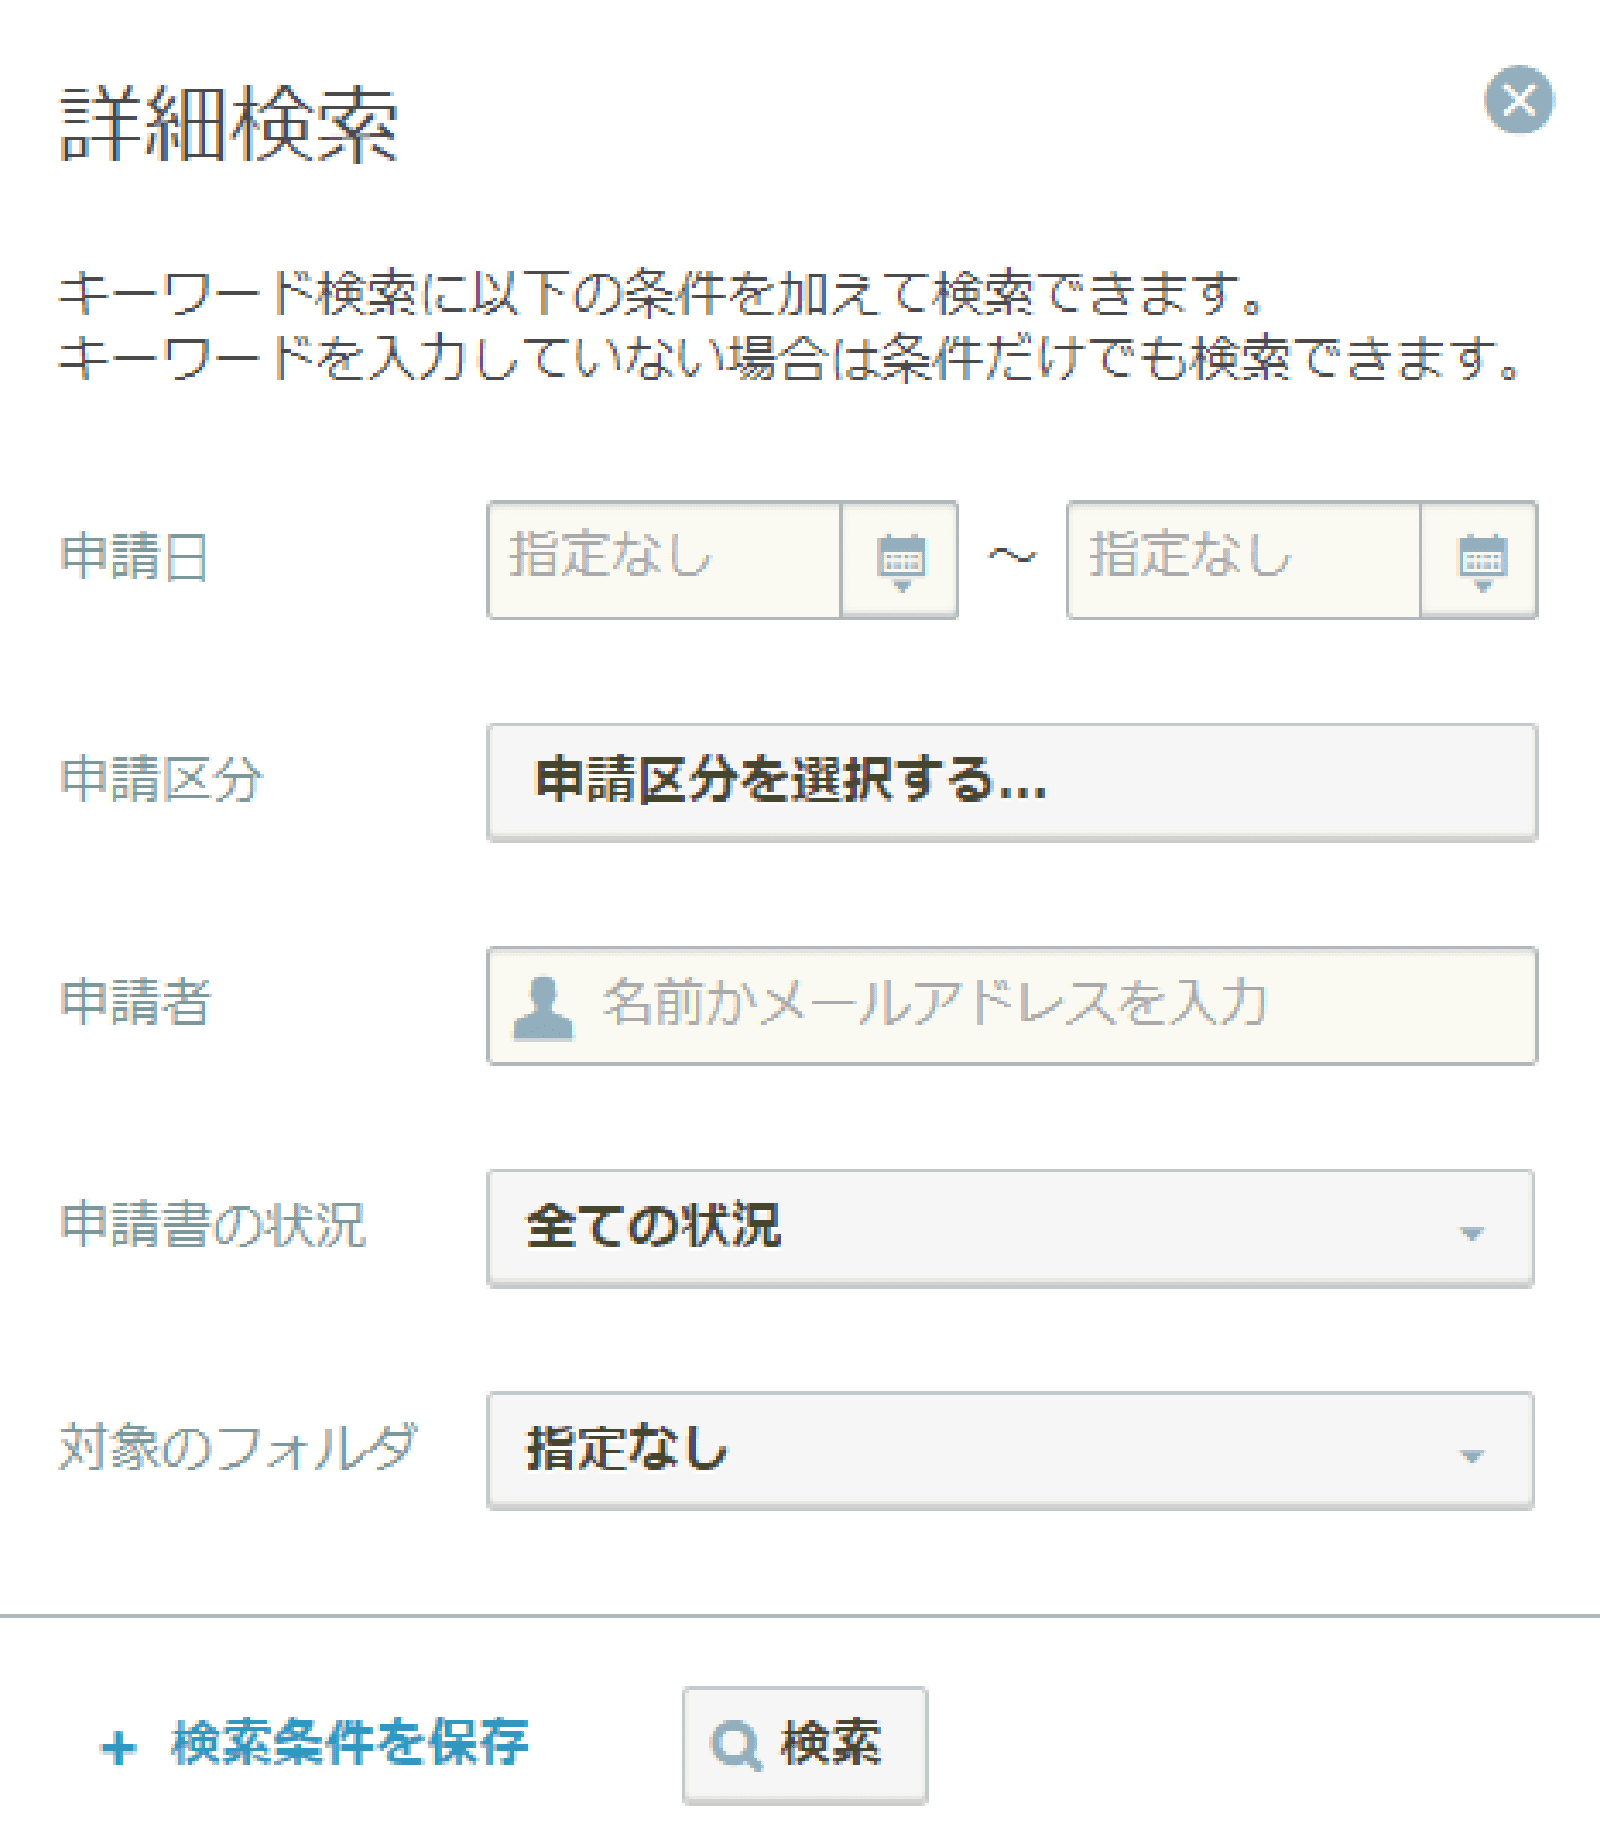 rakumo ワークフロー 利用者向けの詳細検索画面